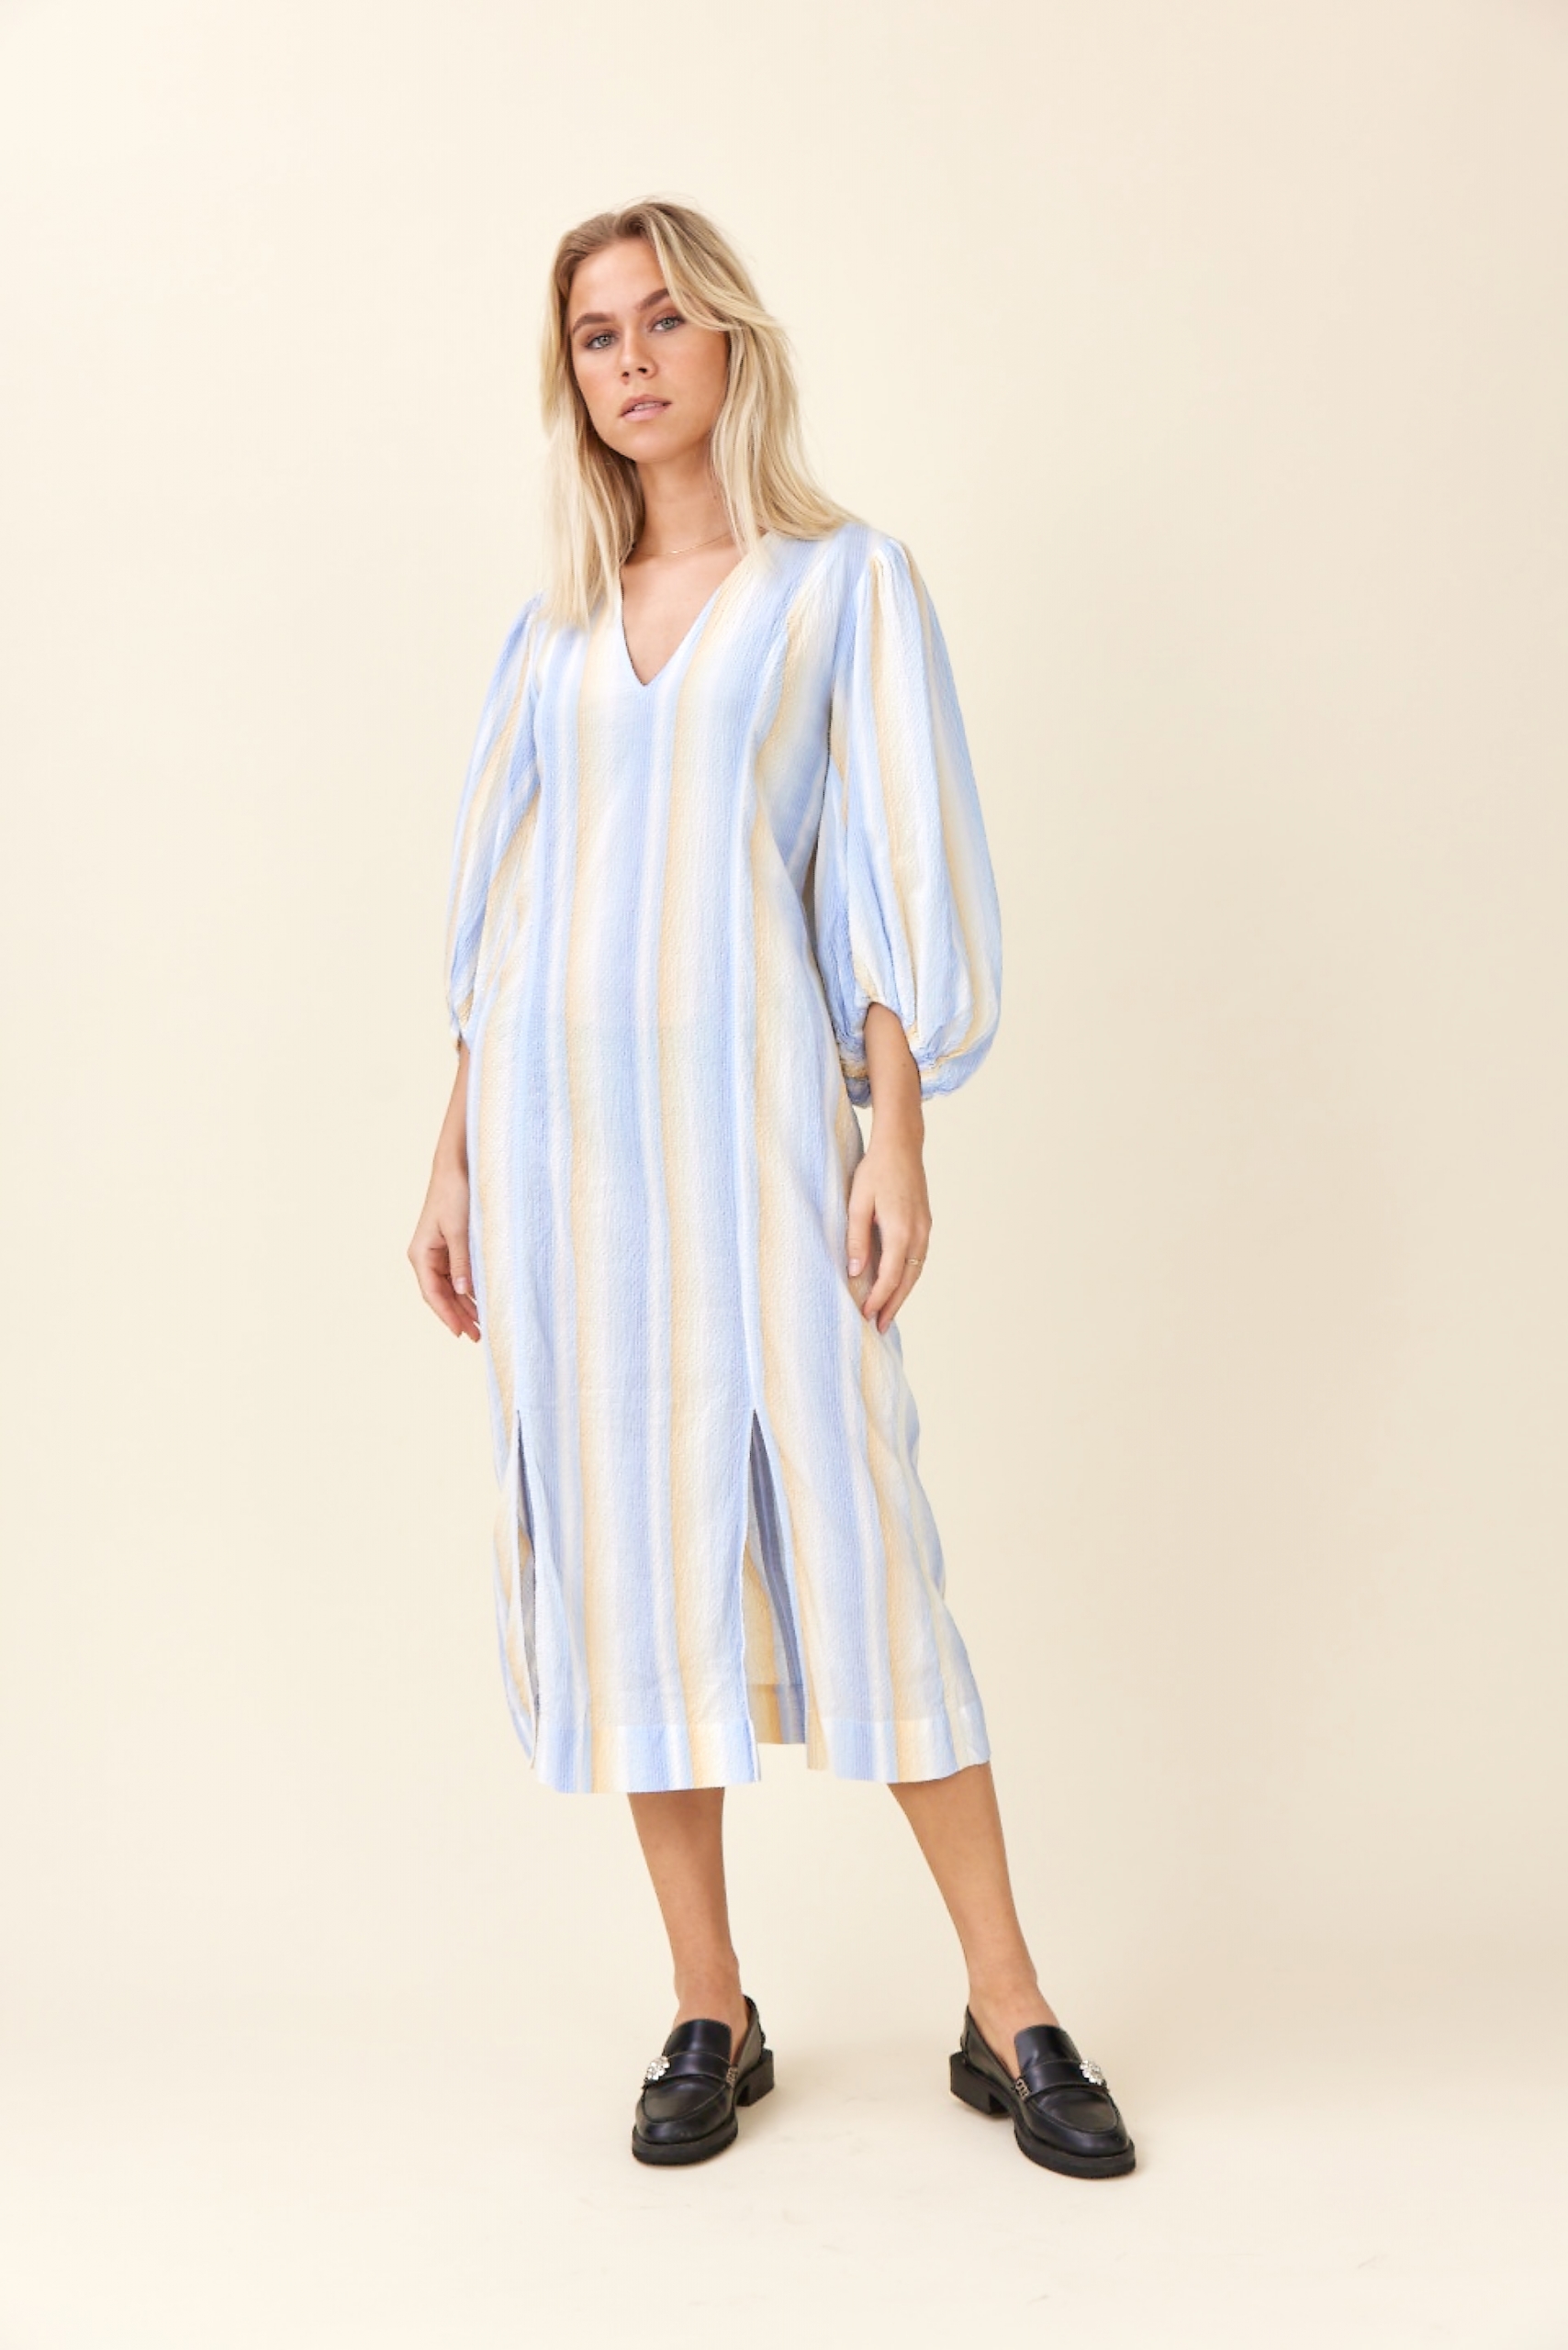 GANNI – Seersucker Stripe Dress (38) – House share